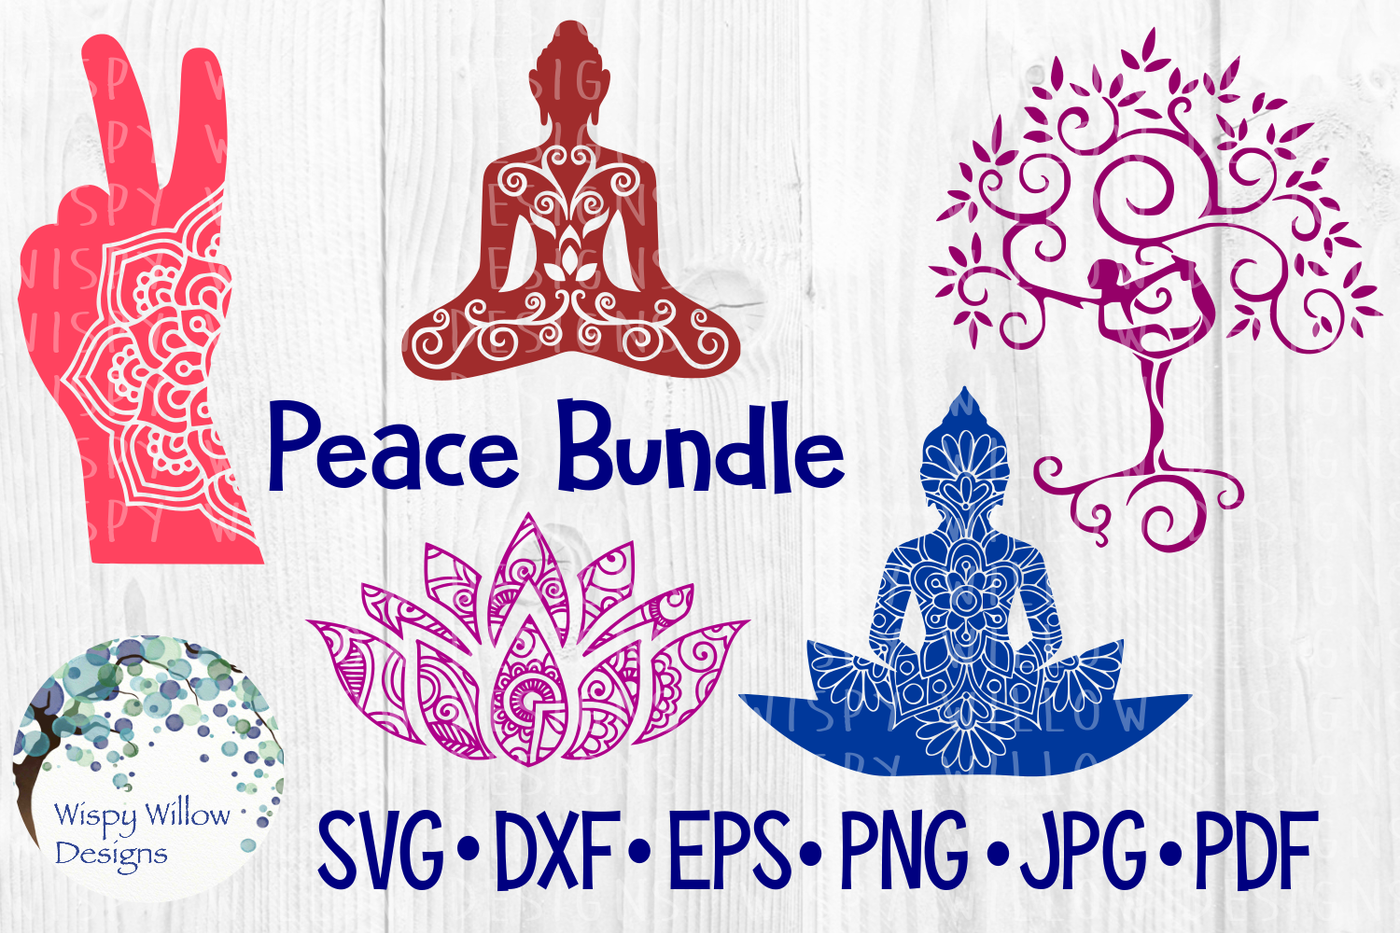 Peace Bundle Buddha Peace Sign Yoga Lotus Svg Dxf Eps Png Jpg Pdf By Wispy Willow Designs Thehungryjpeg Com